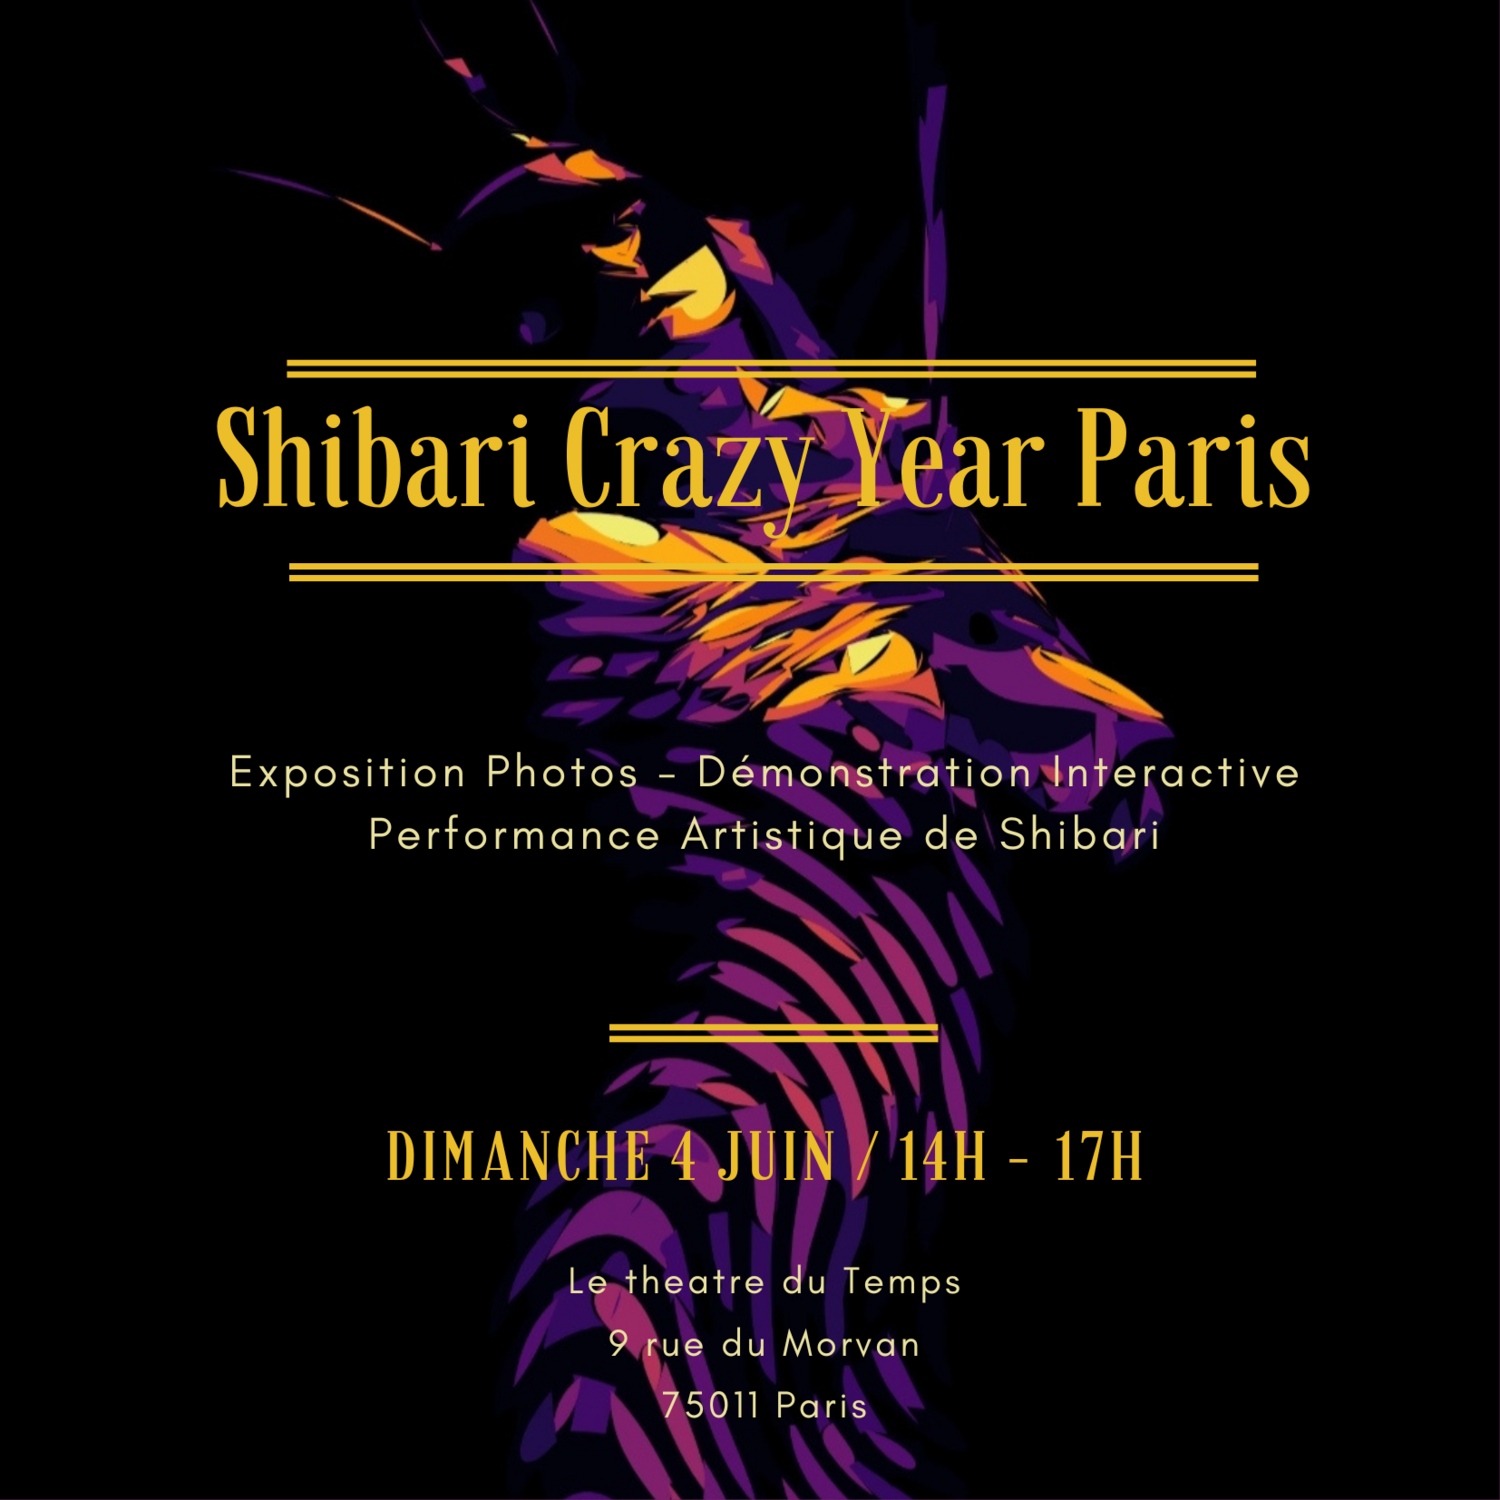 SHIBARI CRAZY YEAR PARIS